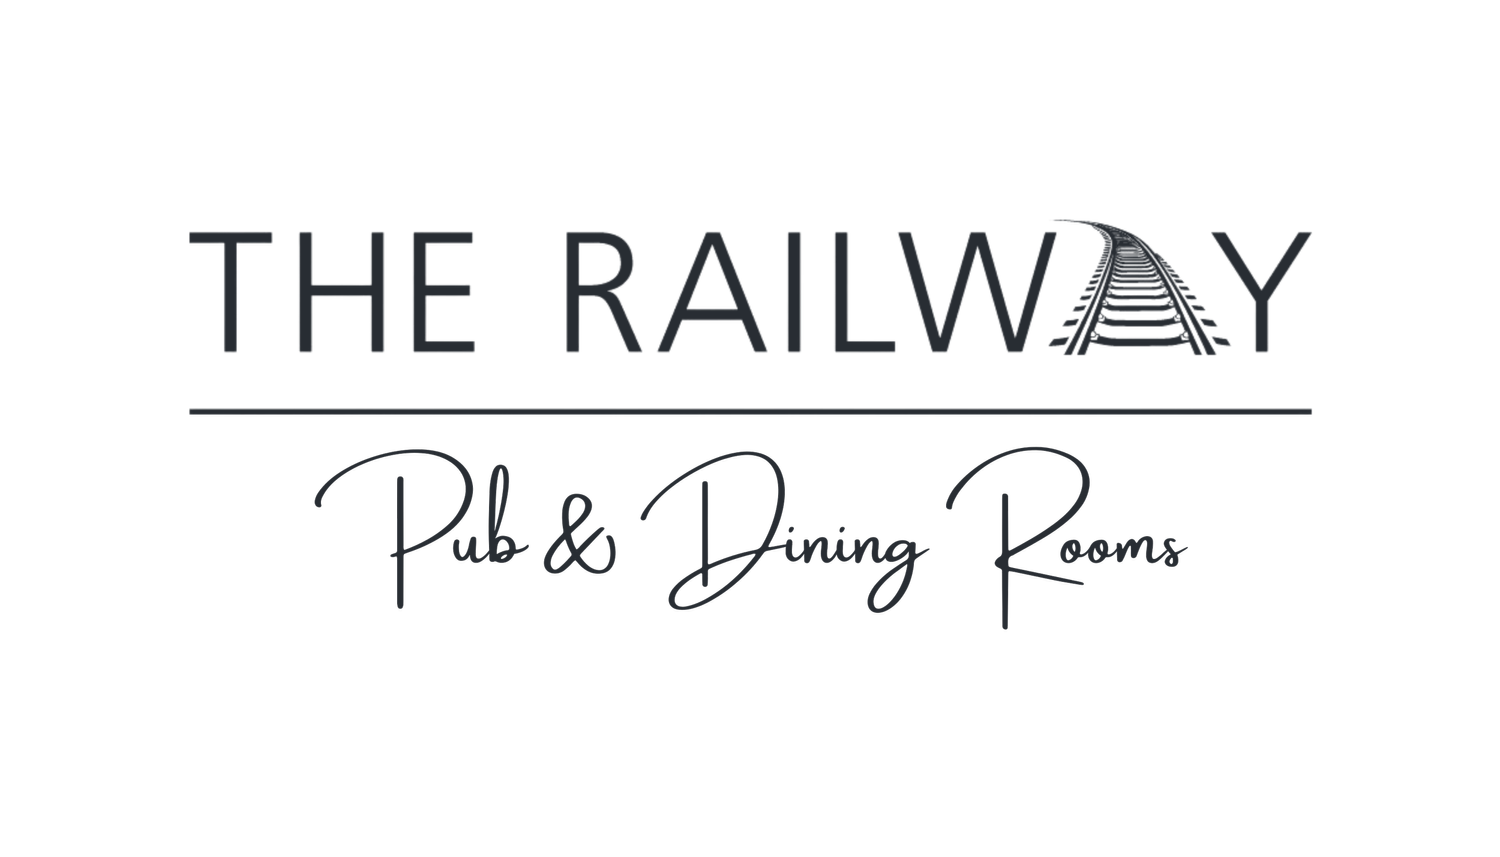 The Railway Teddington